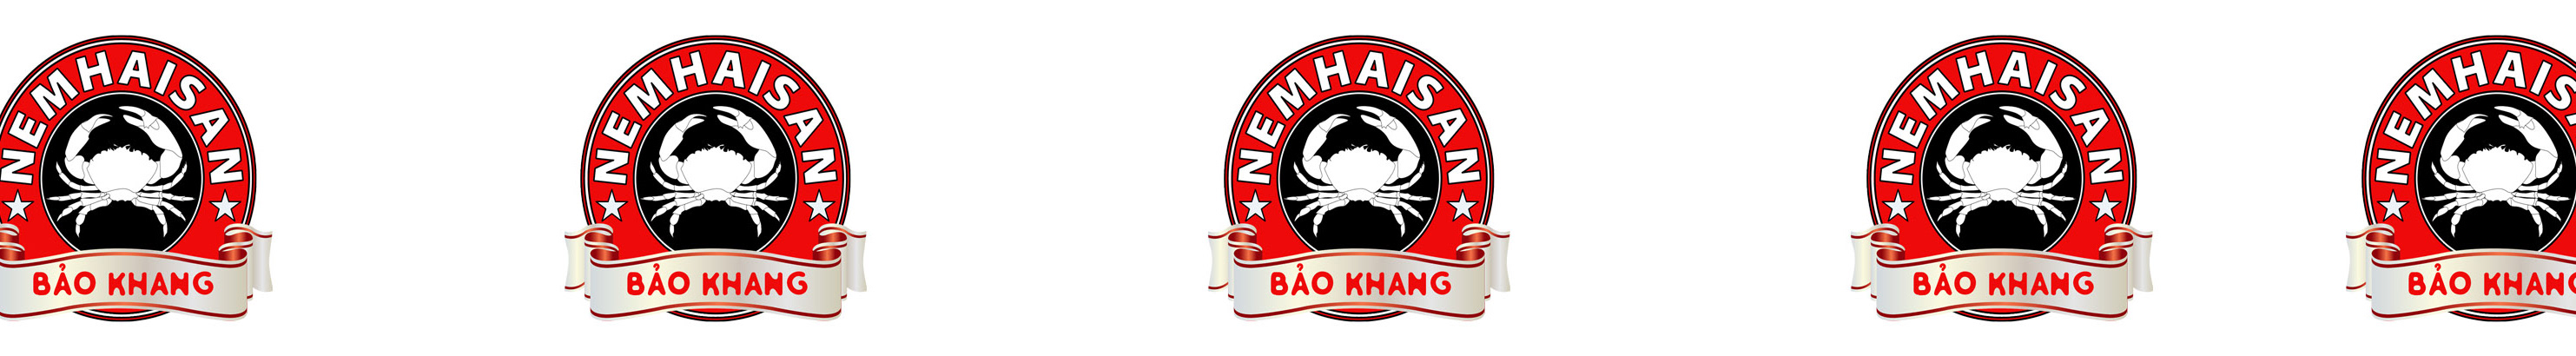 Baner profilu użytkownika Nem Hải Sản